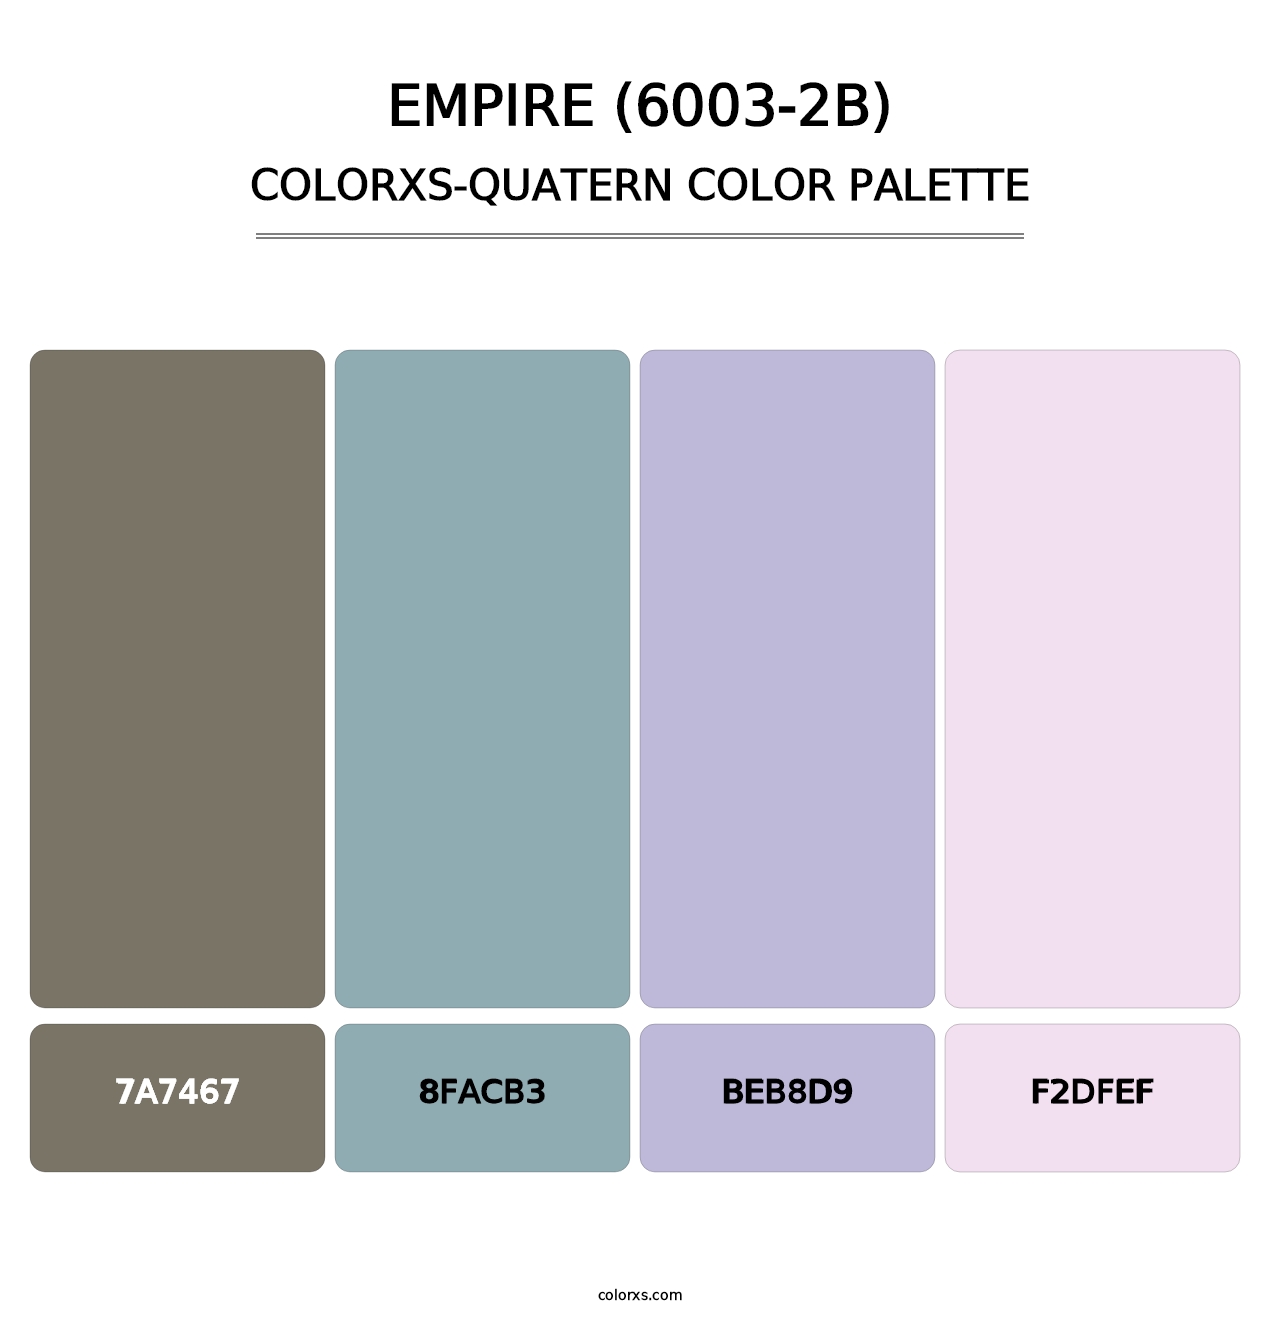 Empire (6003-2B) - Colorxs Quatern Palette